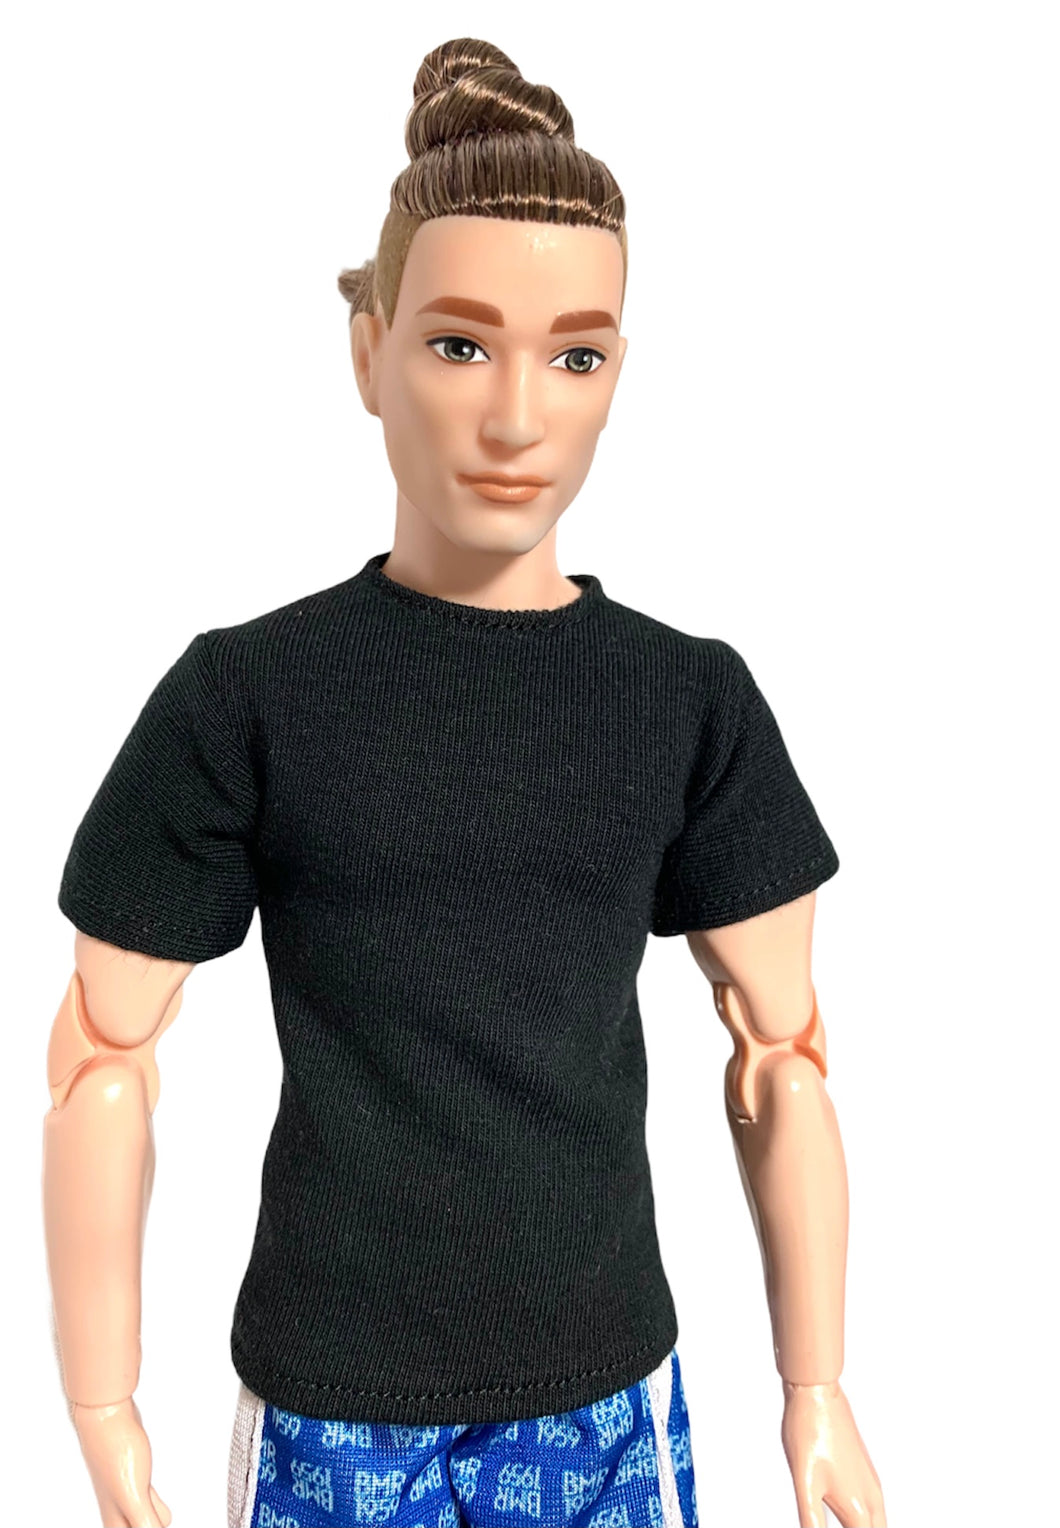 Black T shirt for Ken doll